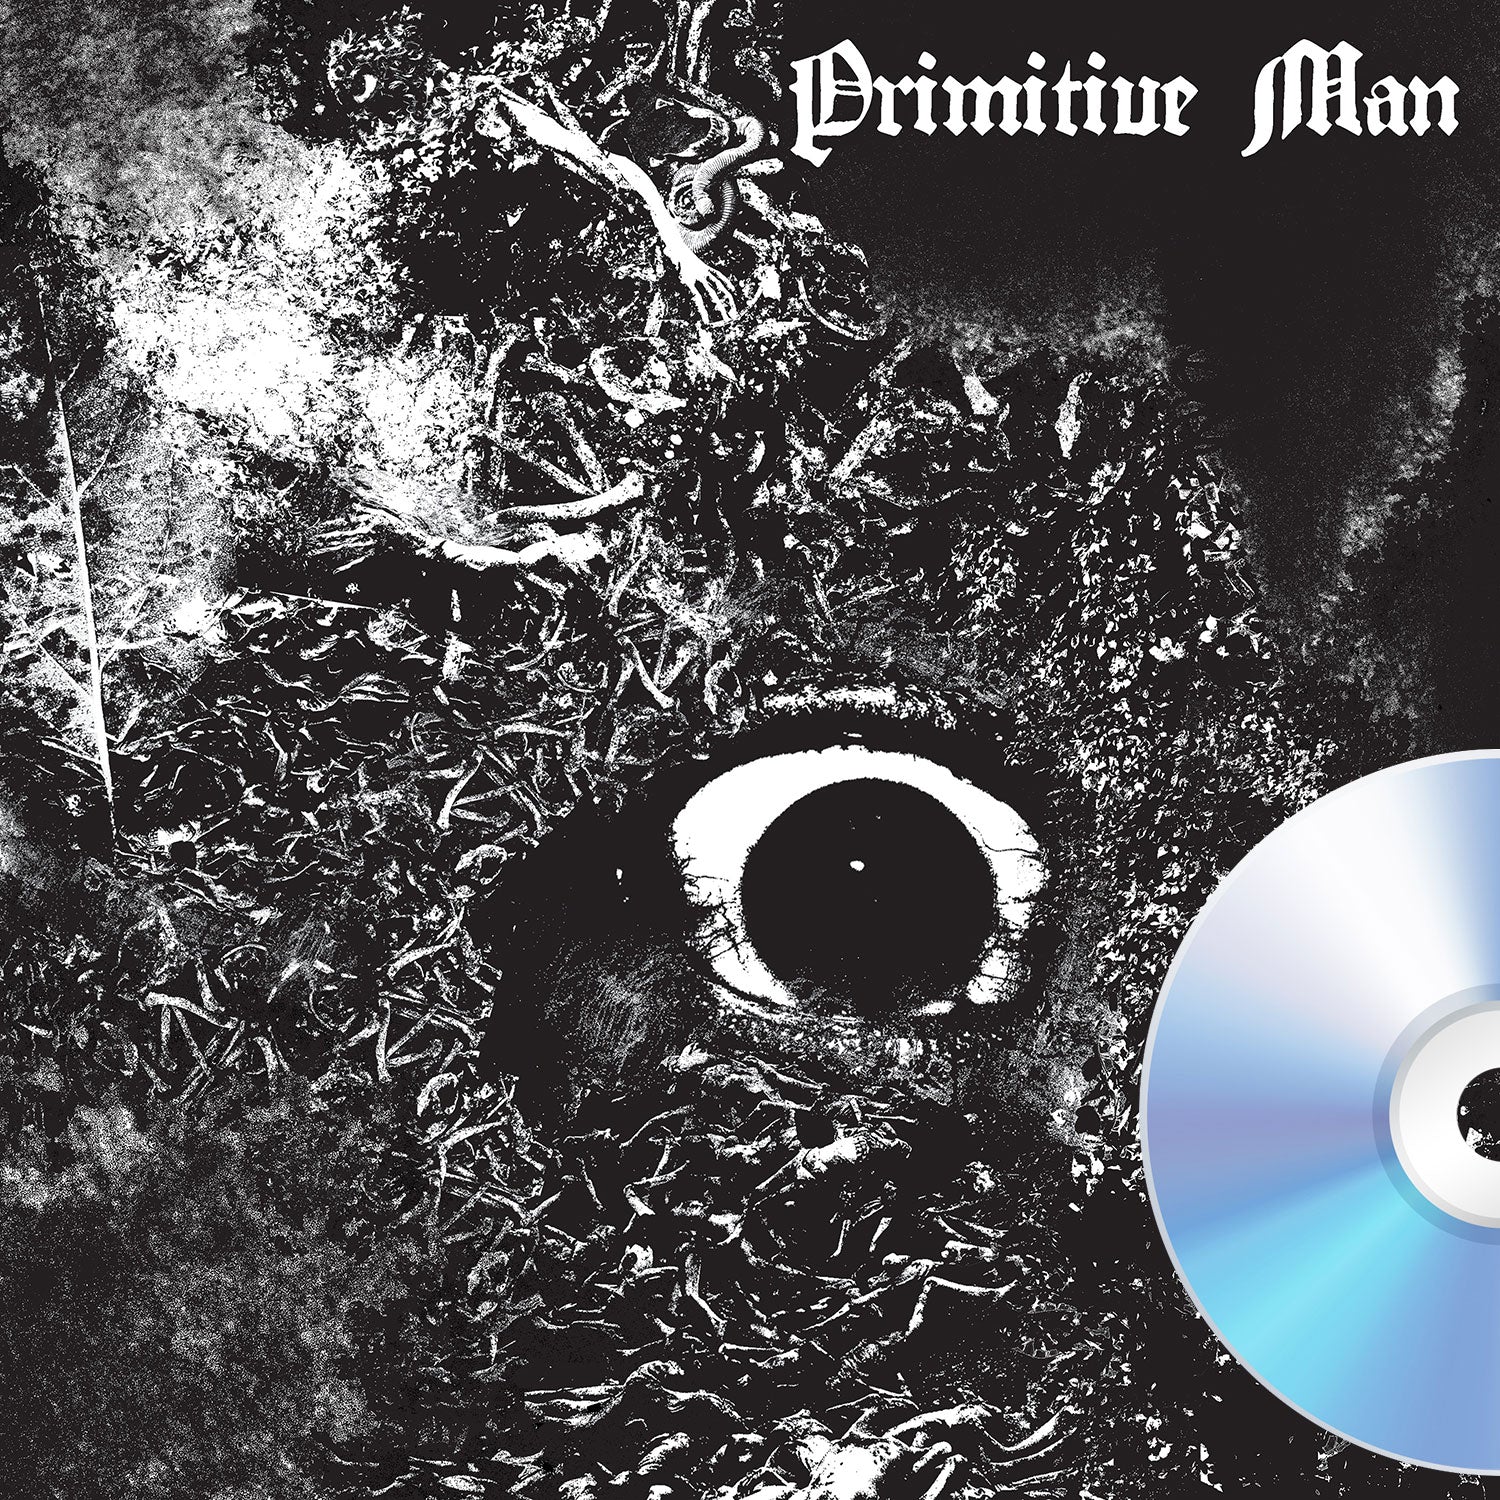 Primitive Man "Immersion" CD